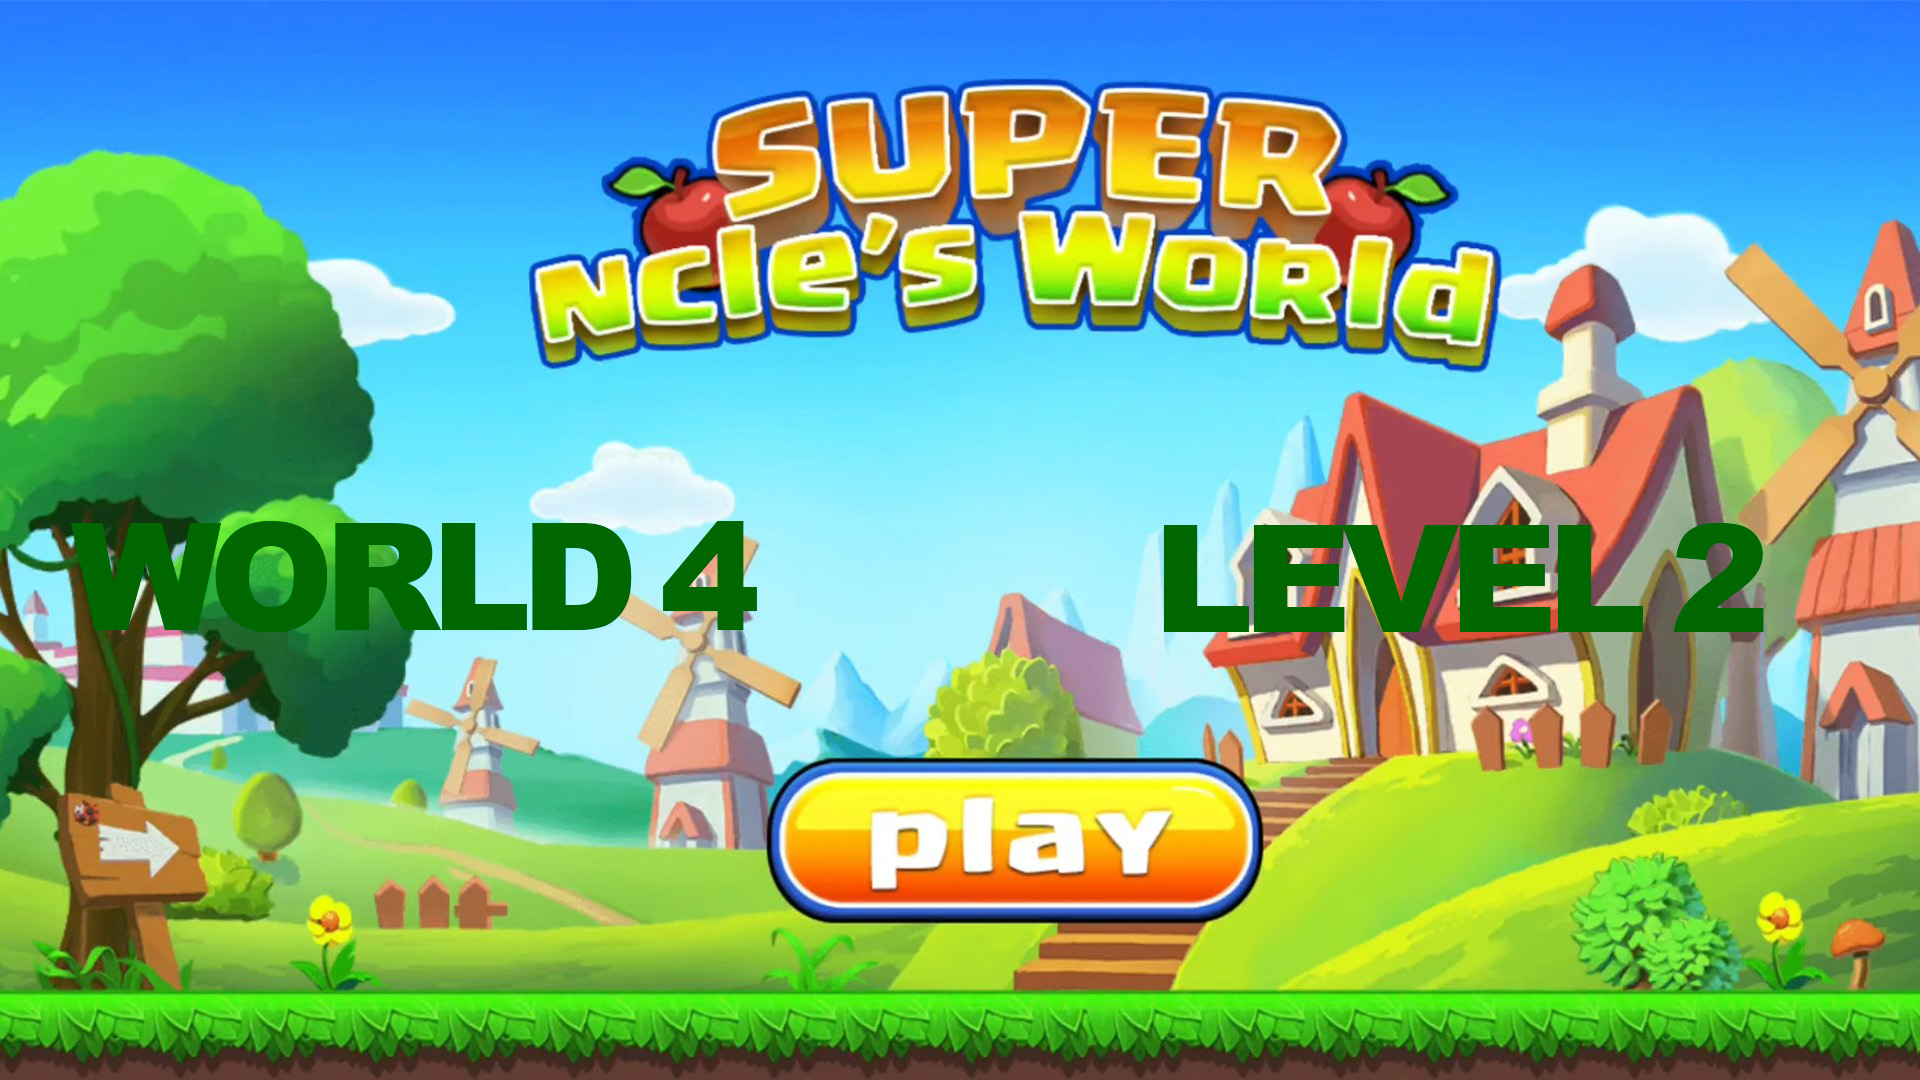 Super ncle's World 4.level 2.